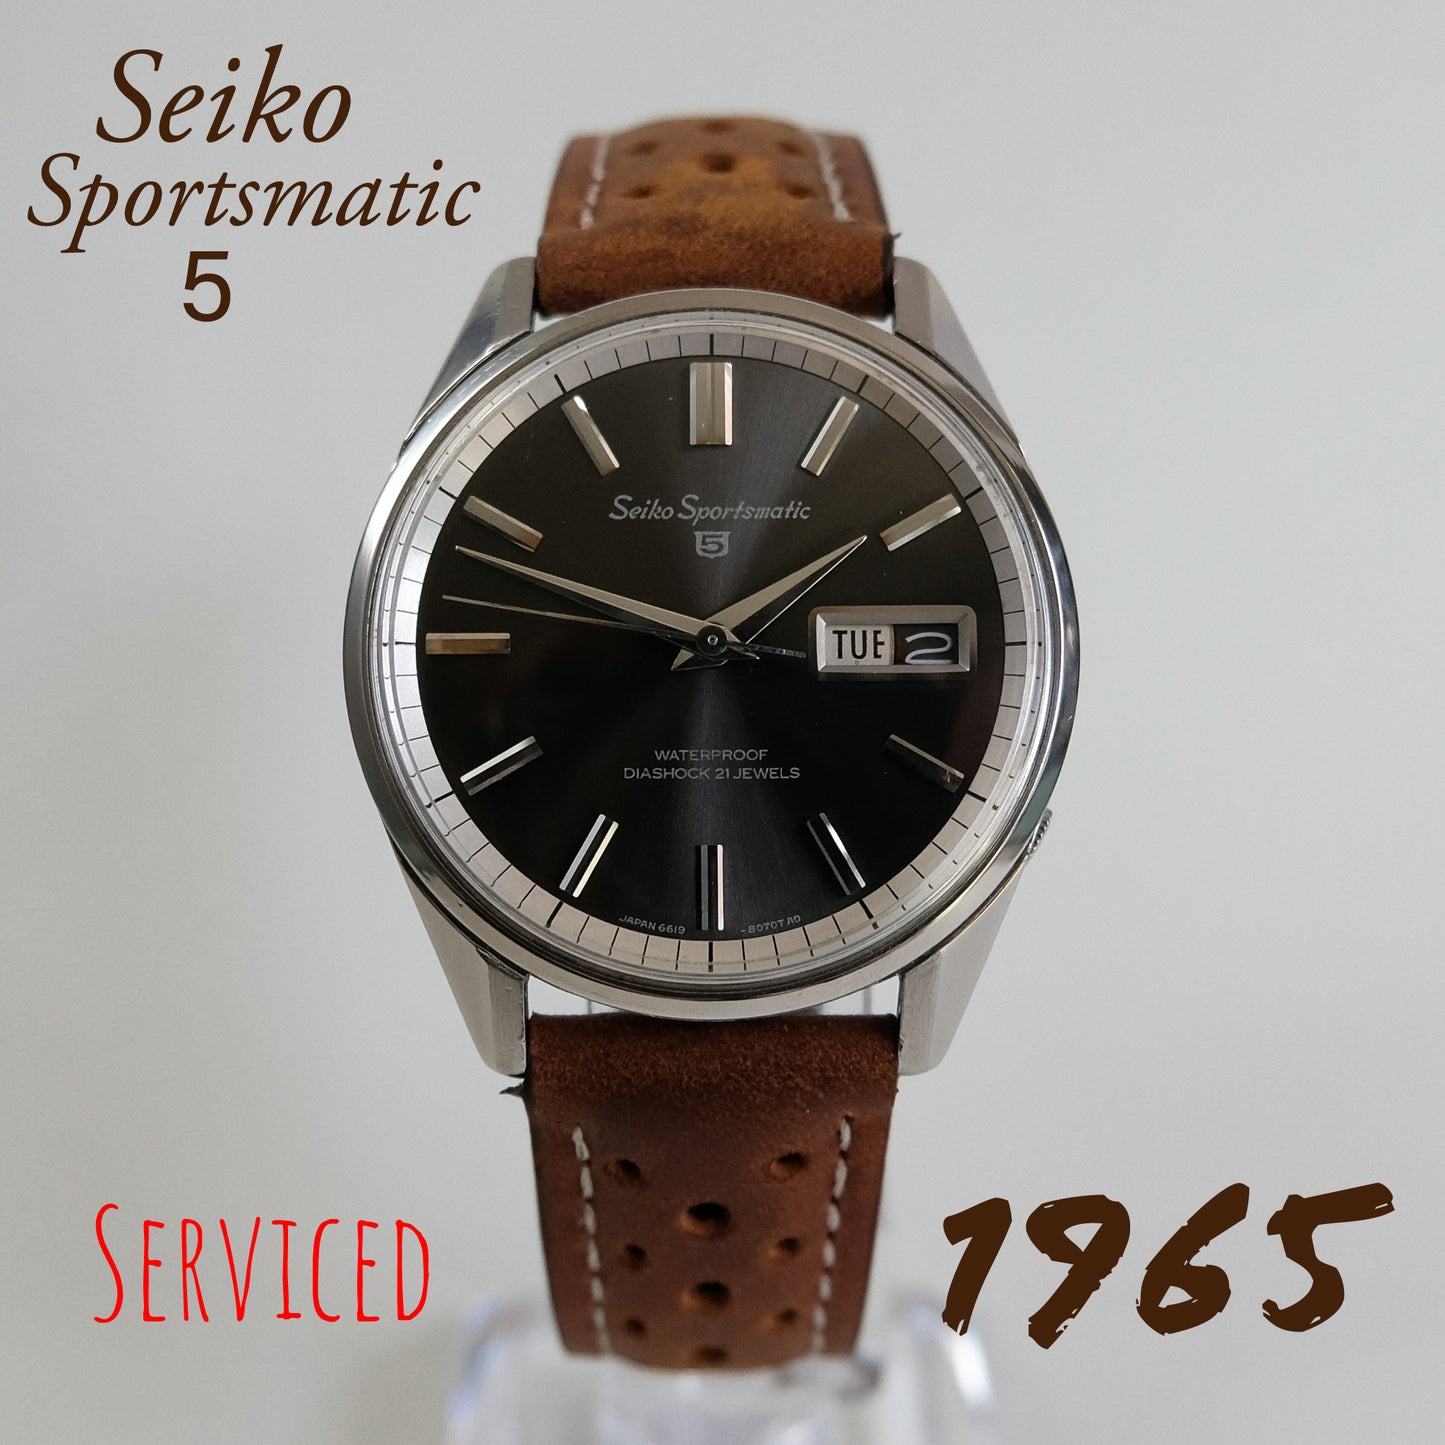 1965 Seiko Sportsmatic 5 6619-8050